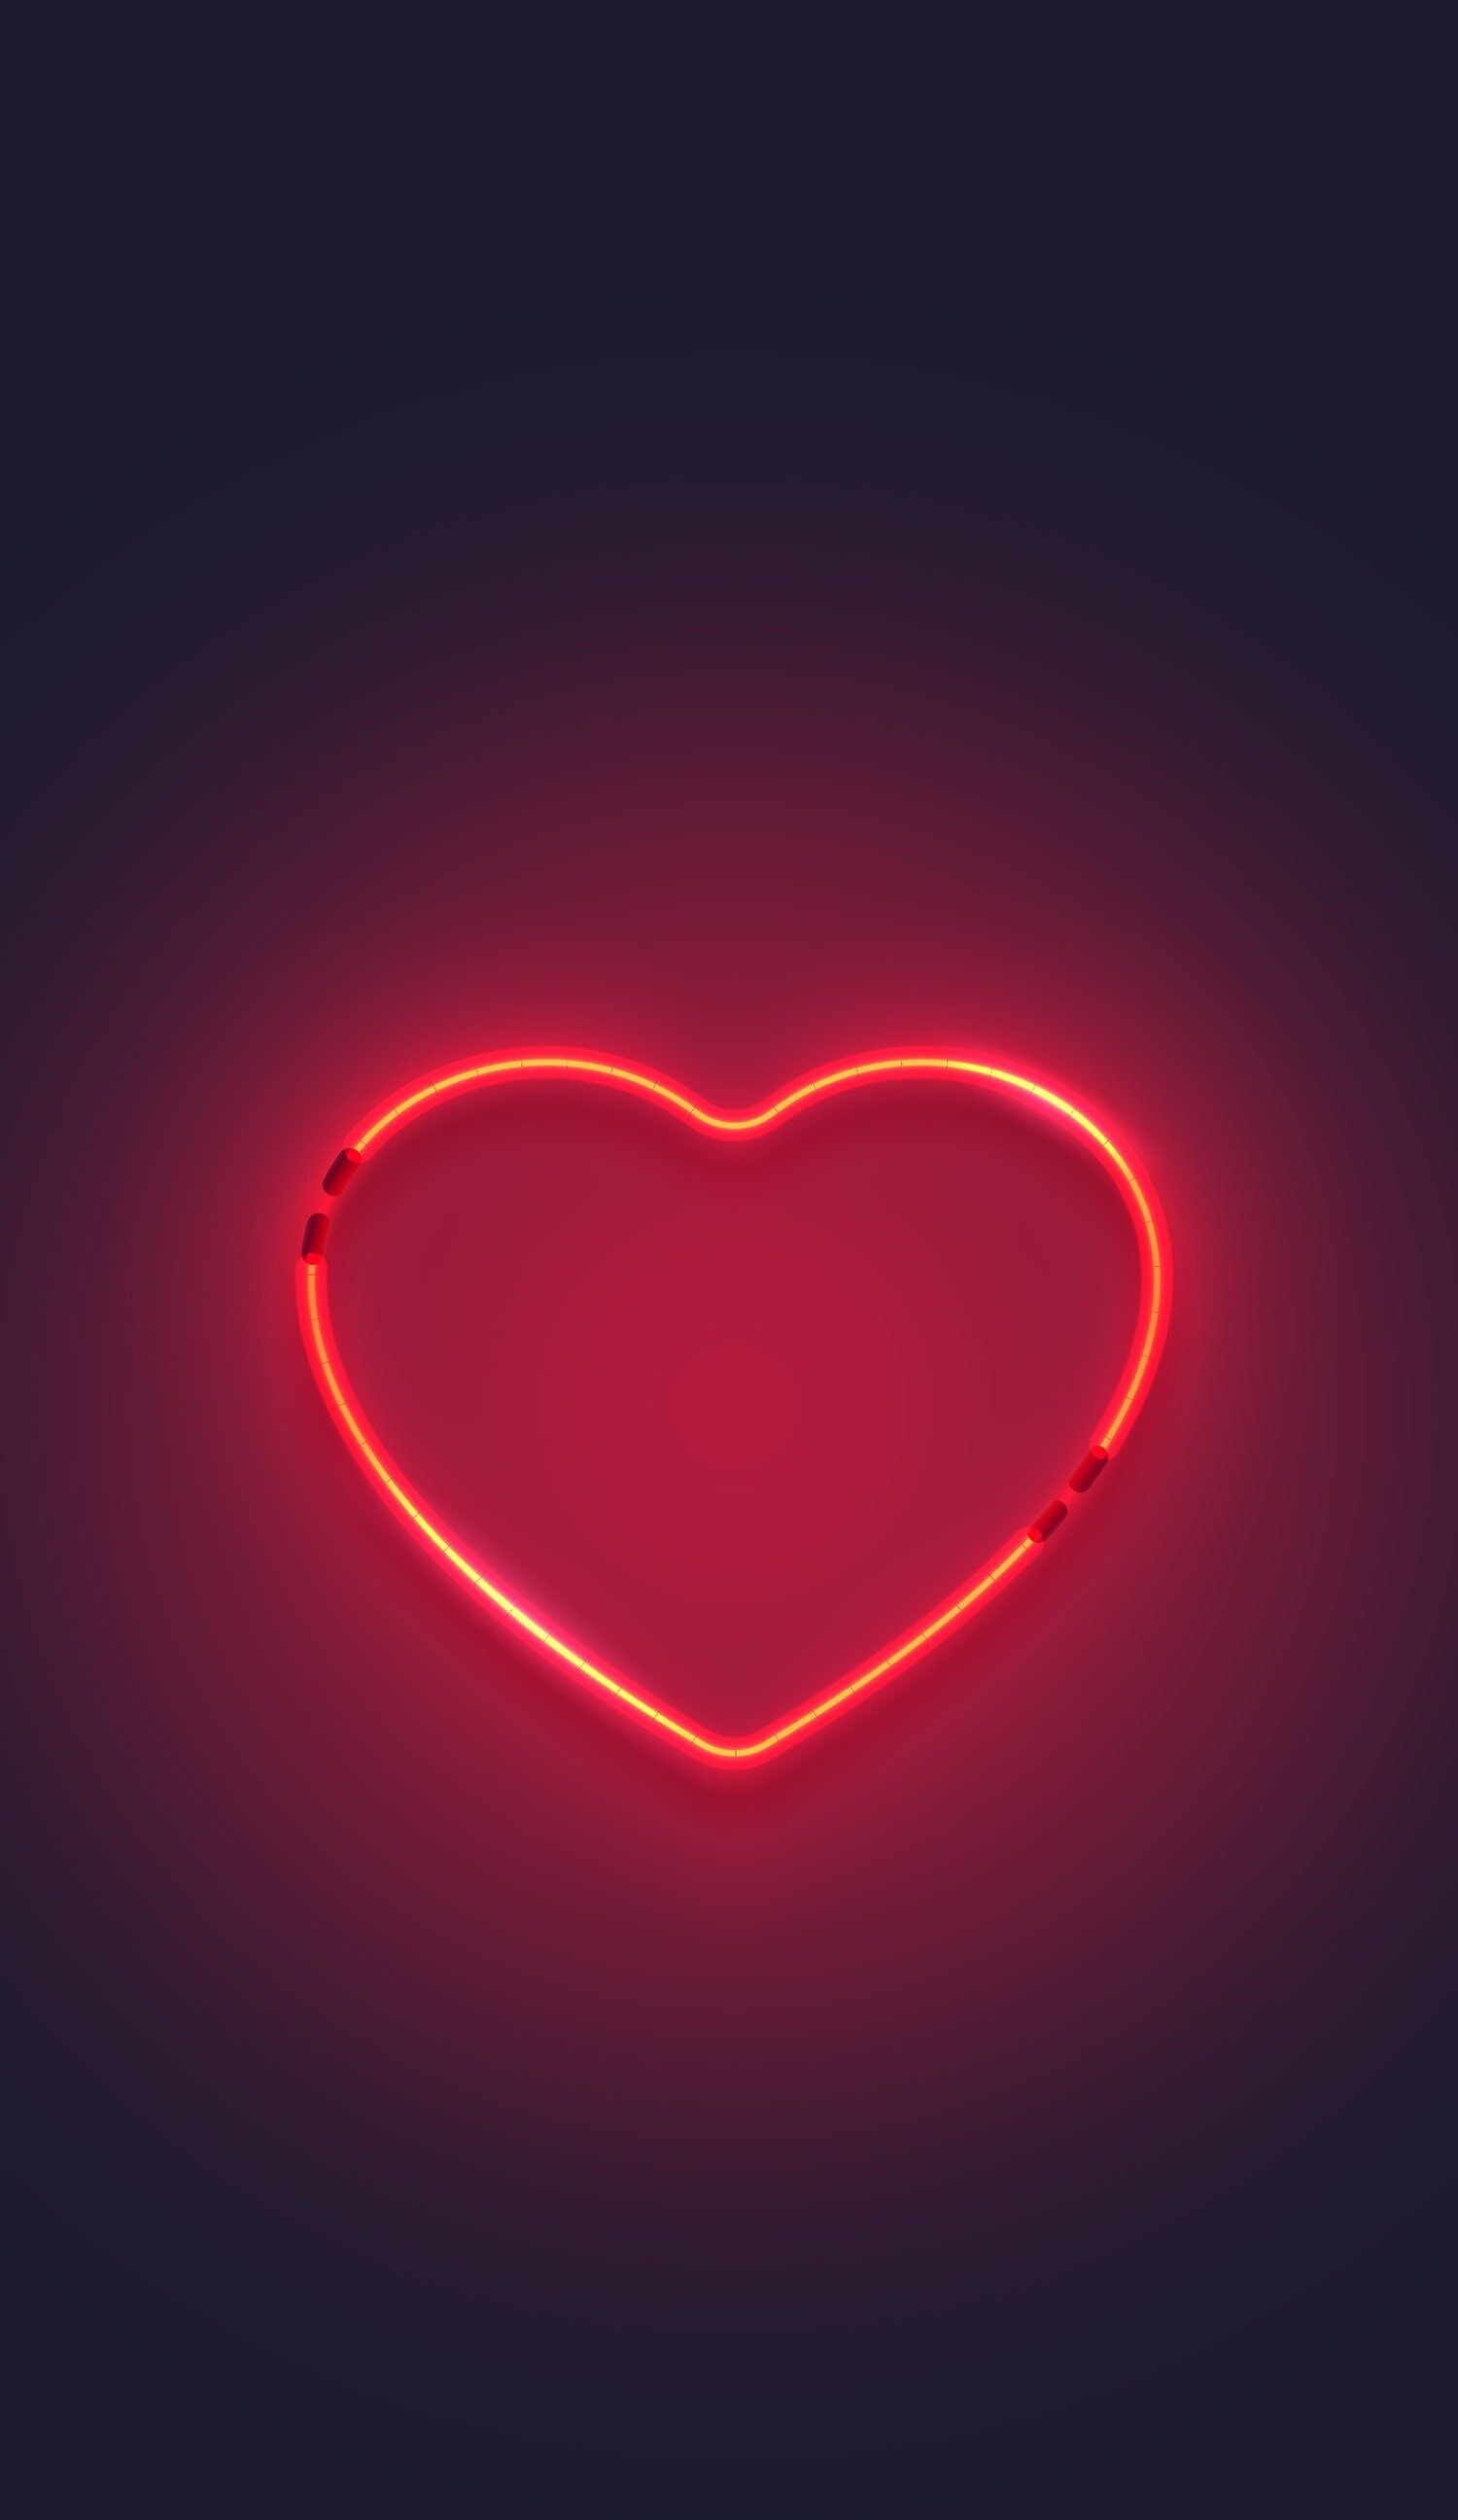 A red neon heart on a black background - Neon orange